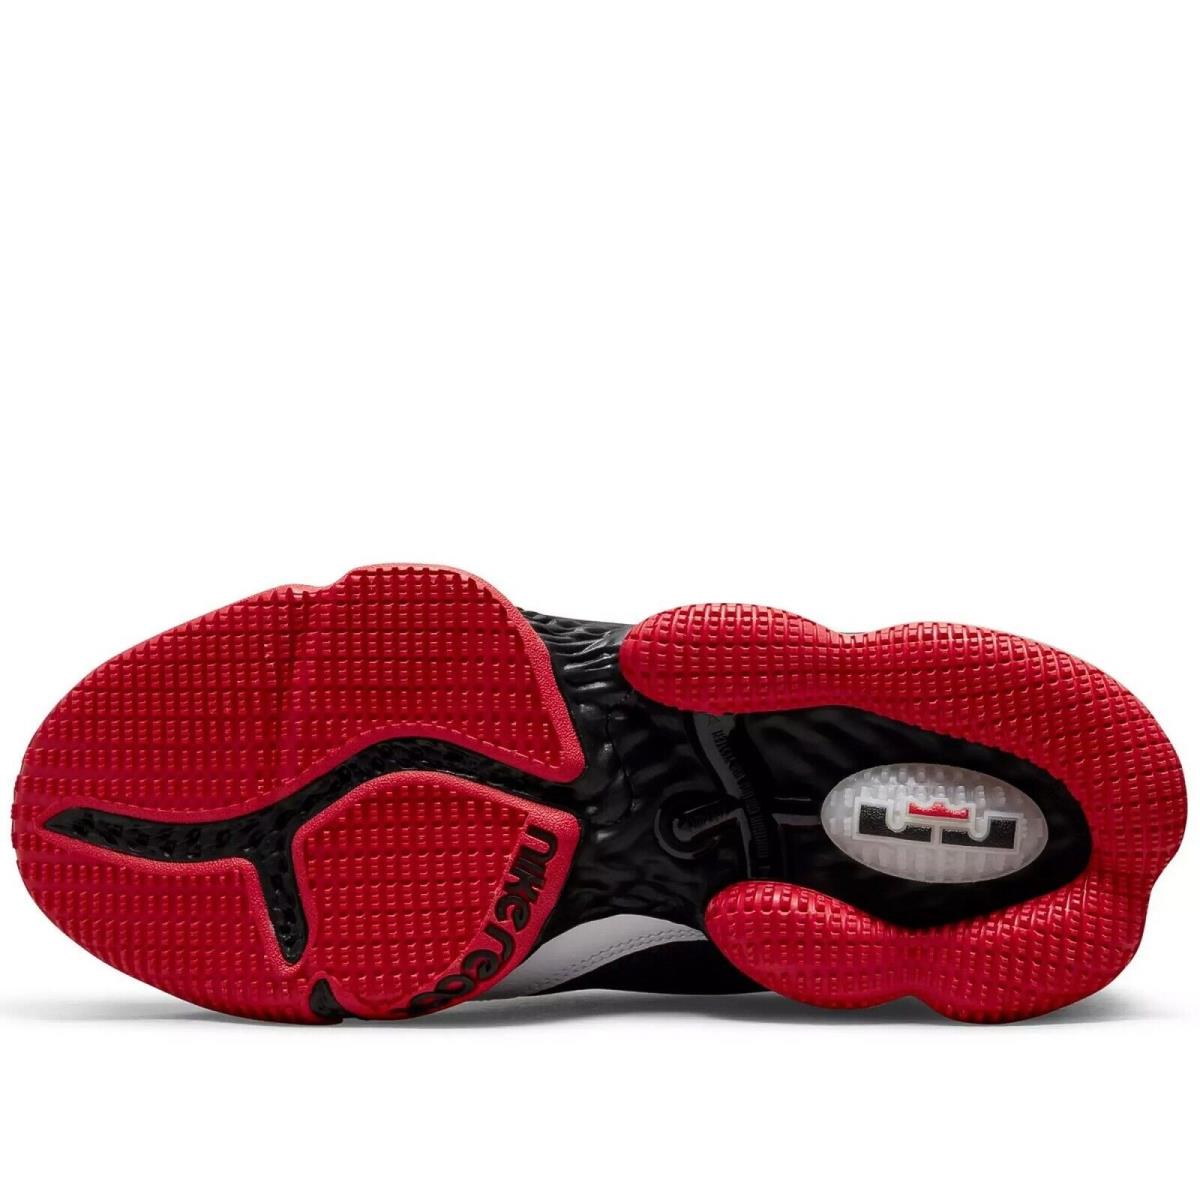 Nike shoes LeBron Low - Black/University Red/White 7